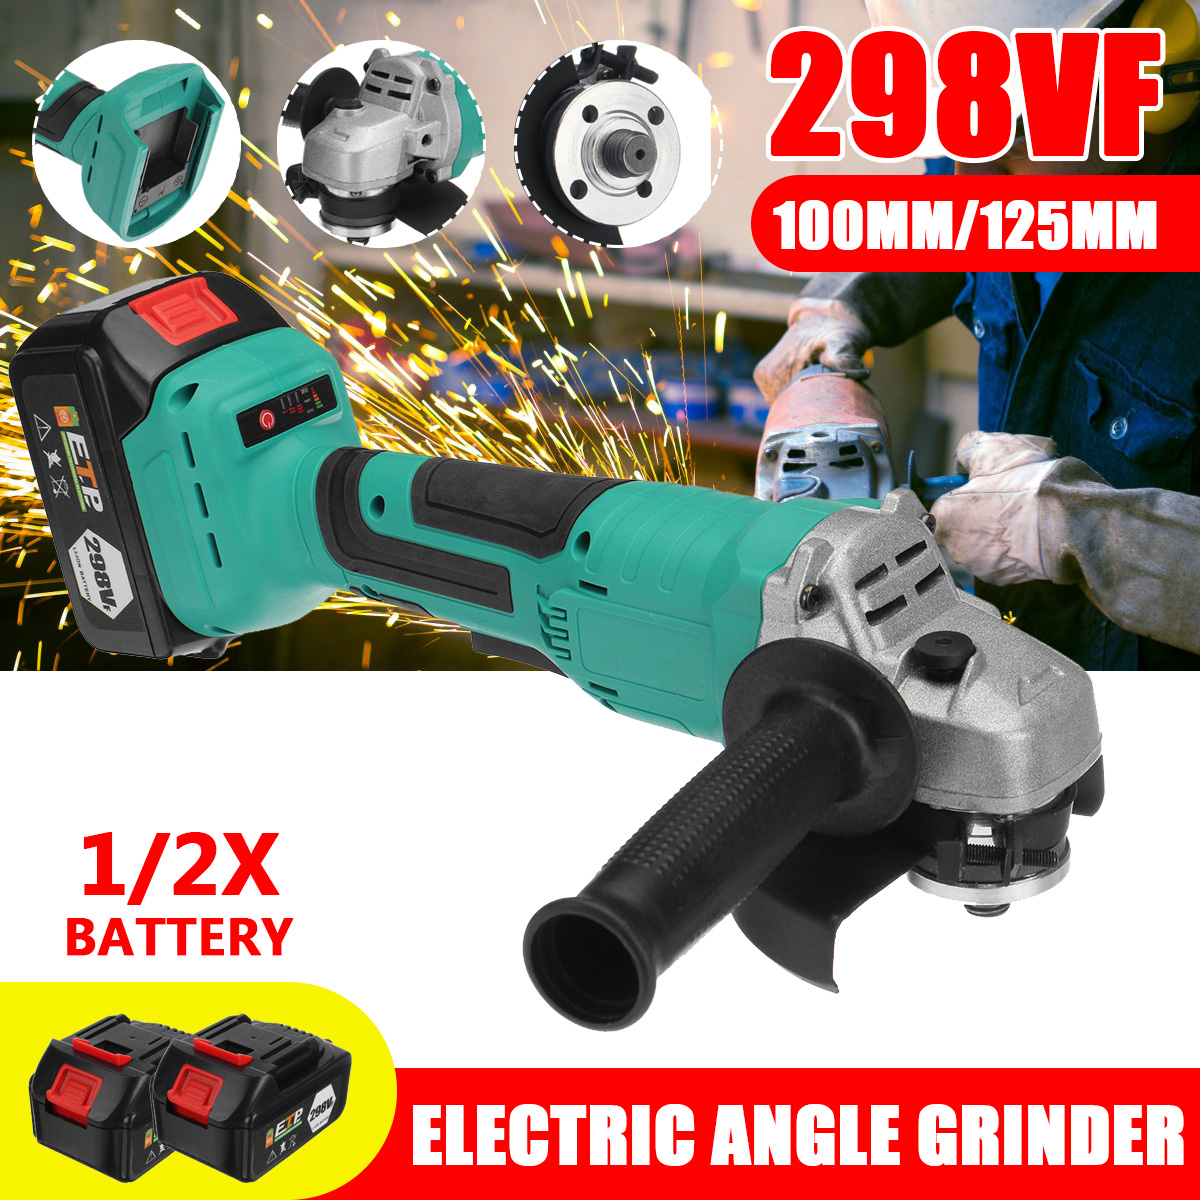 298VF 100mm/125mm Brushless Cordless Angle Grinder Portable Cutting Grinding Polishing Machine W/ 1/2pcs Battery